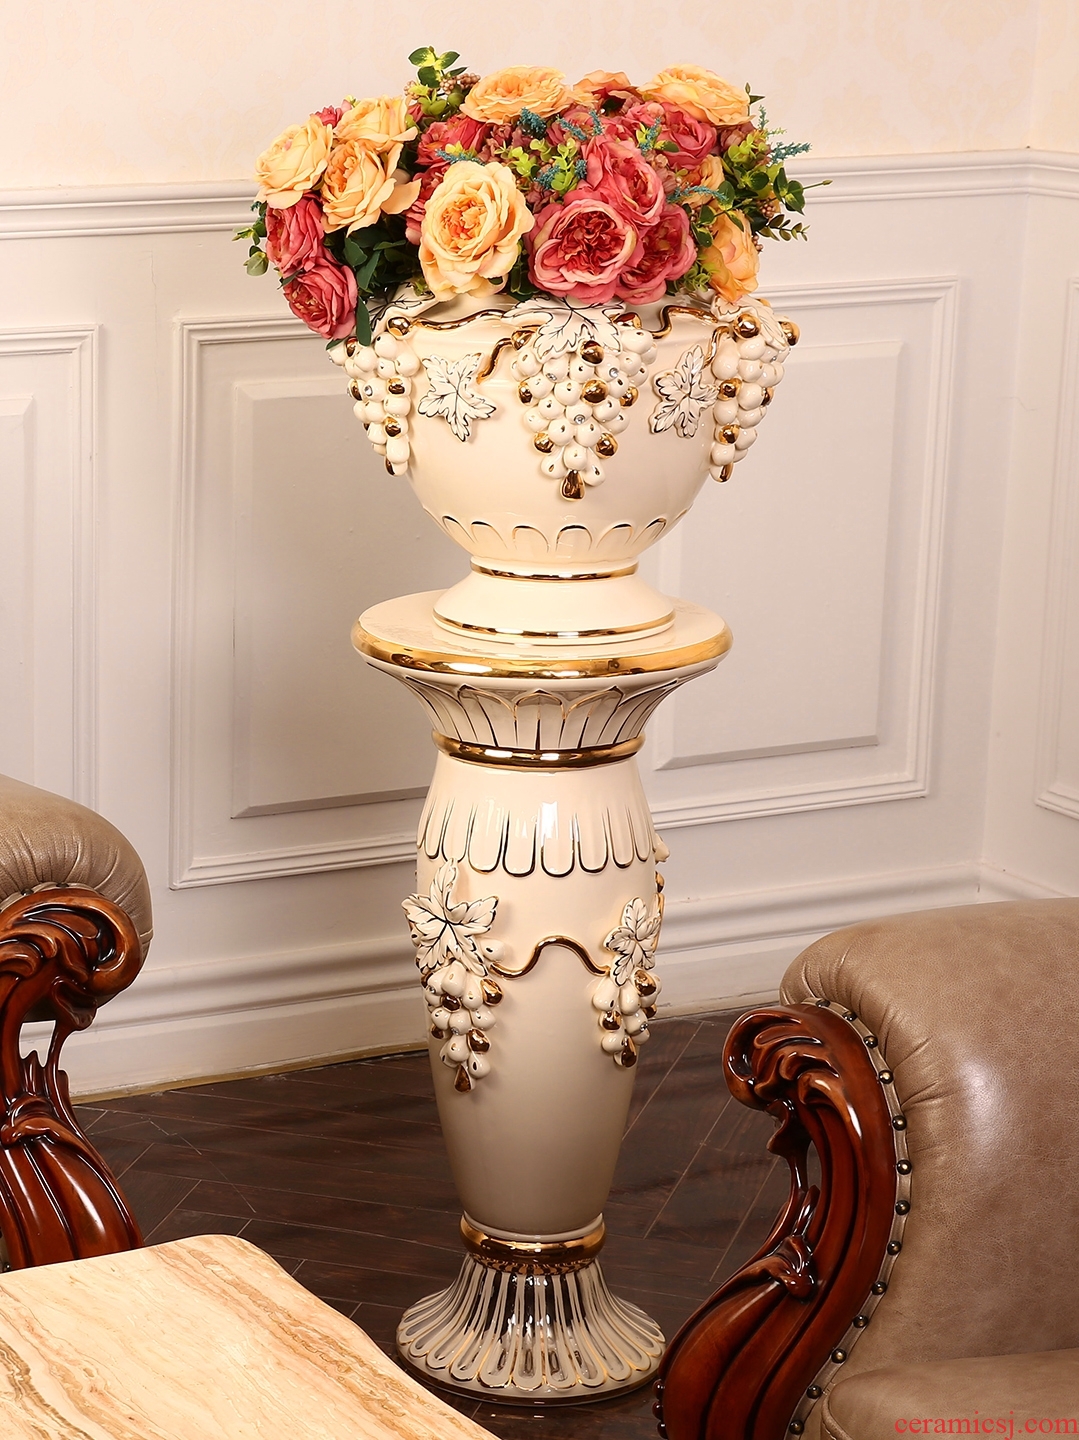 Key-2 Luxury European - style ceramics vase flower arrangement sitting room place the hotel villa large ground flowerpot Roman column ornaments